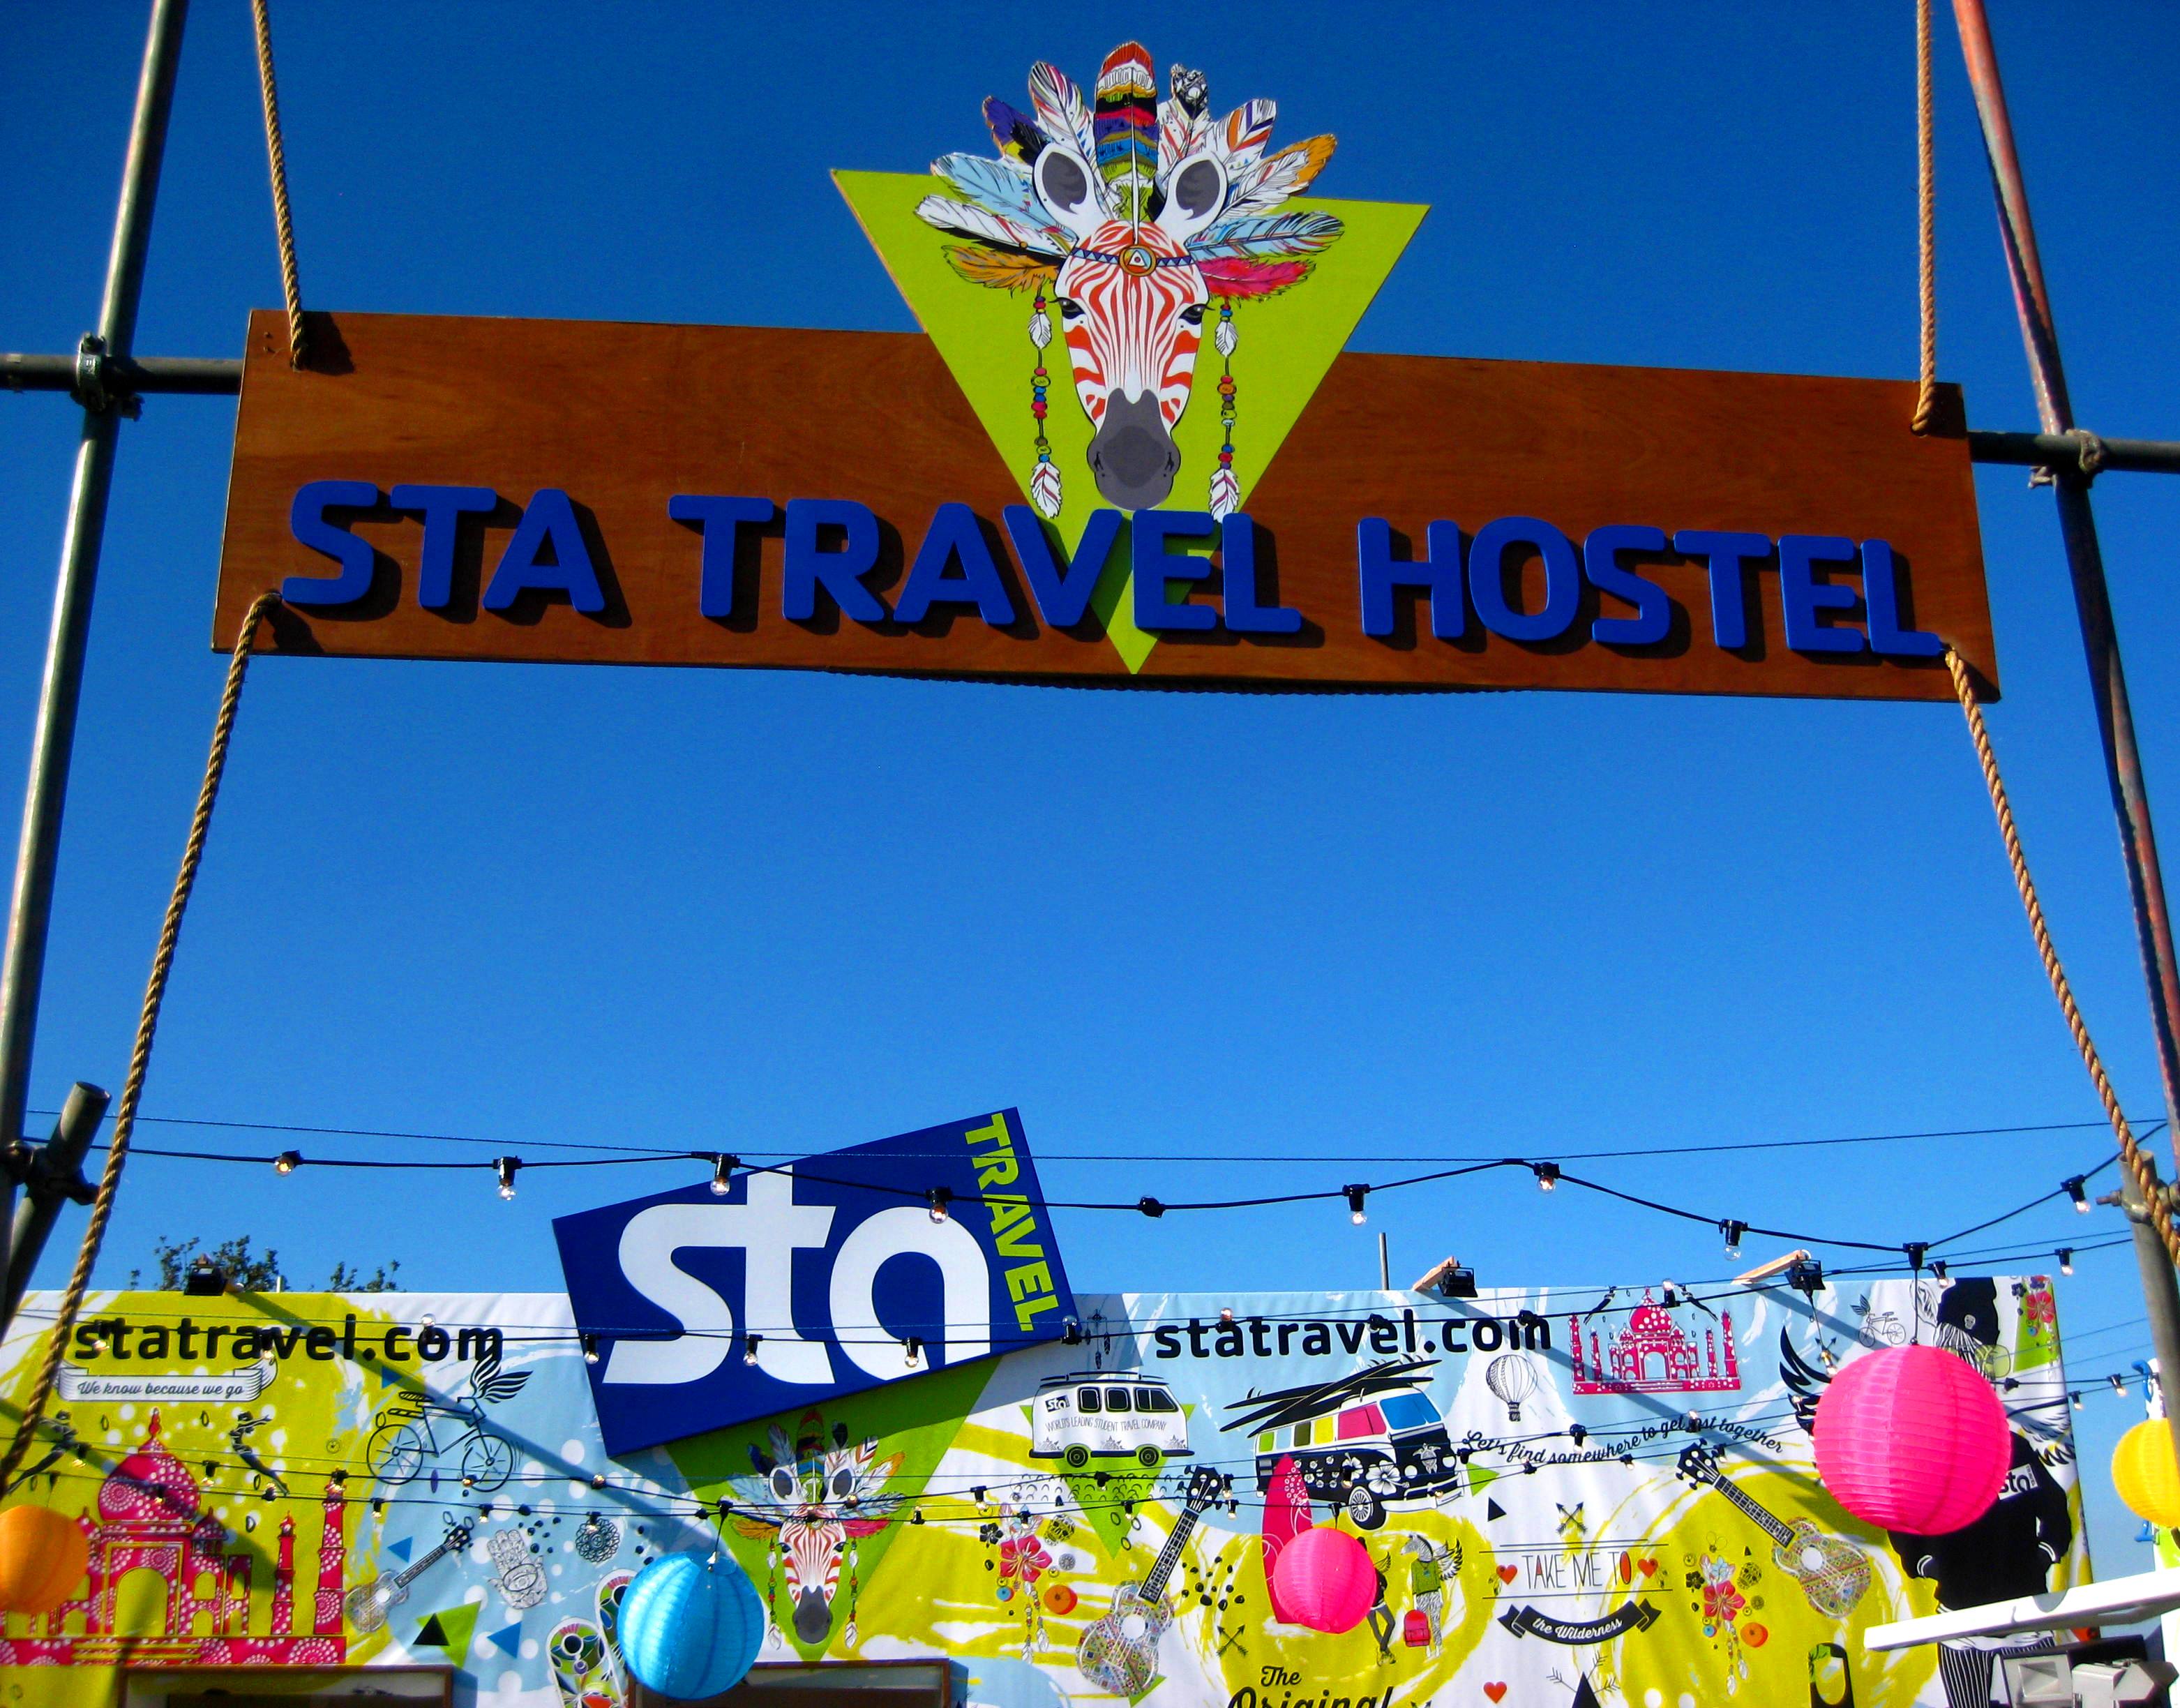 STA Travel Hostel at Bestival